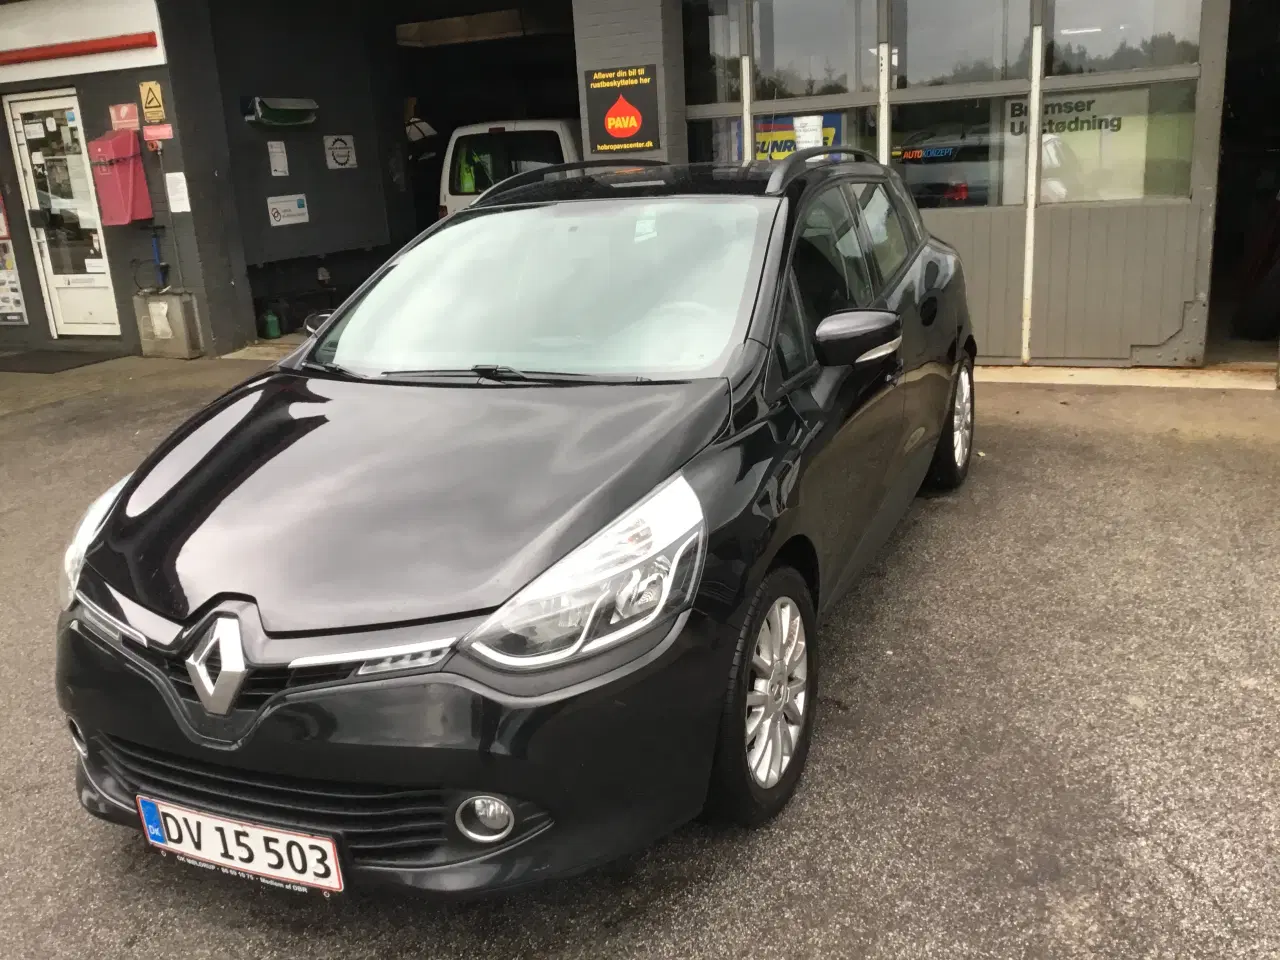 Billede 1 - Renault clio 1,5 dci st.car årg.2016 